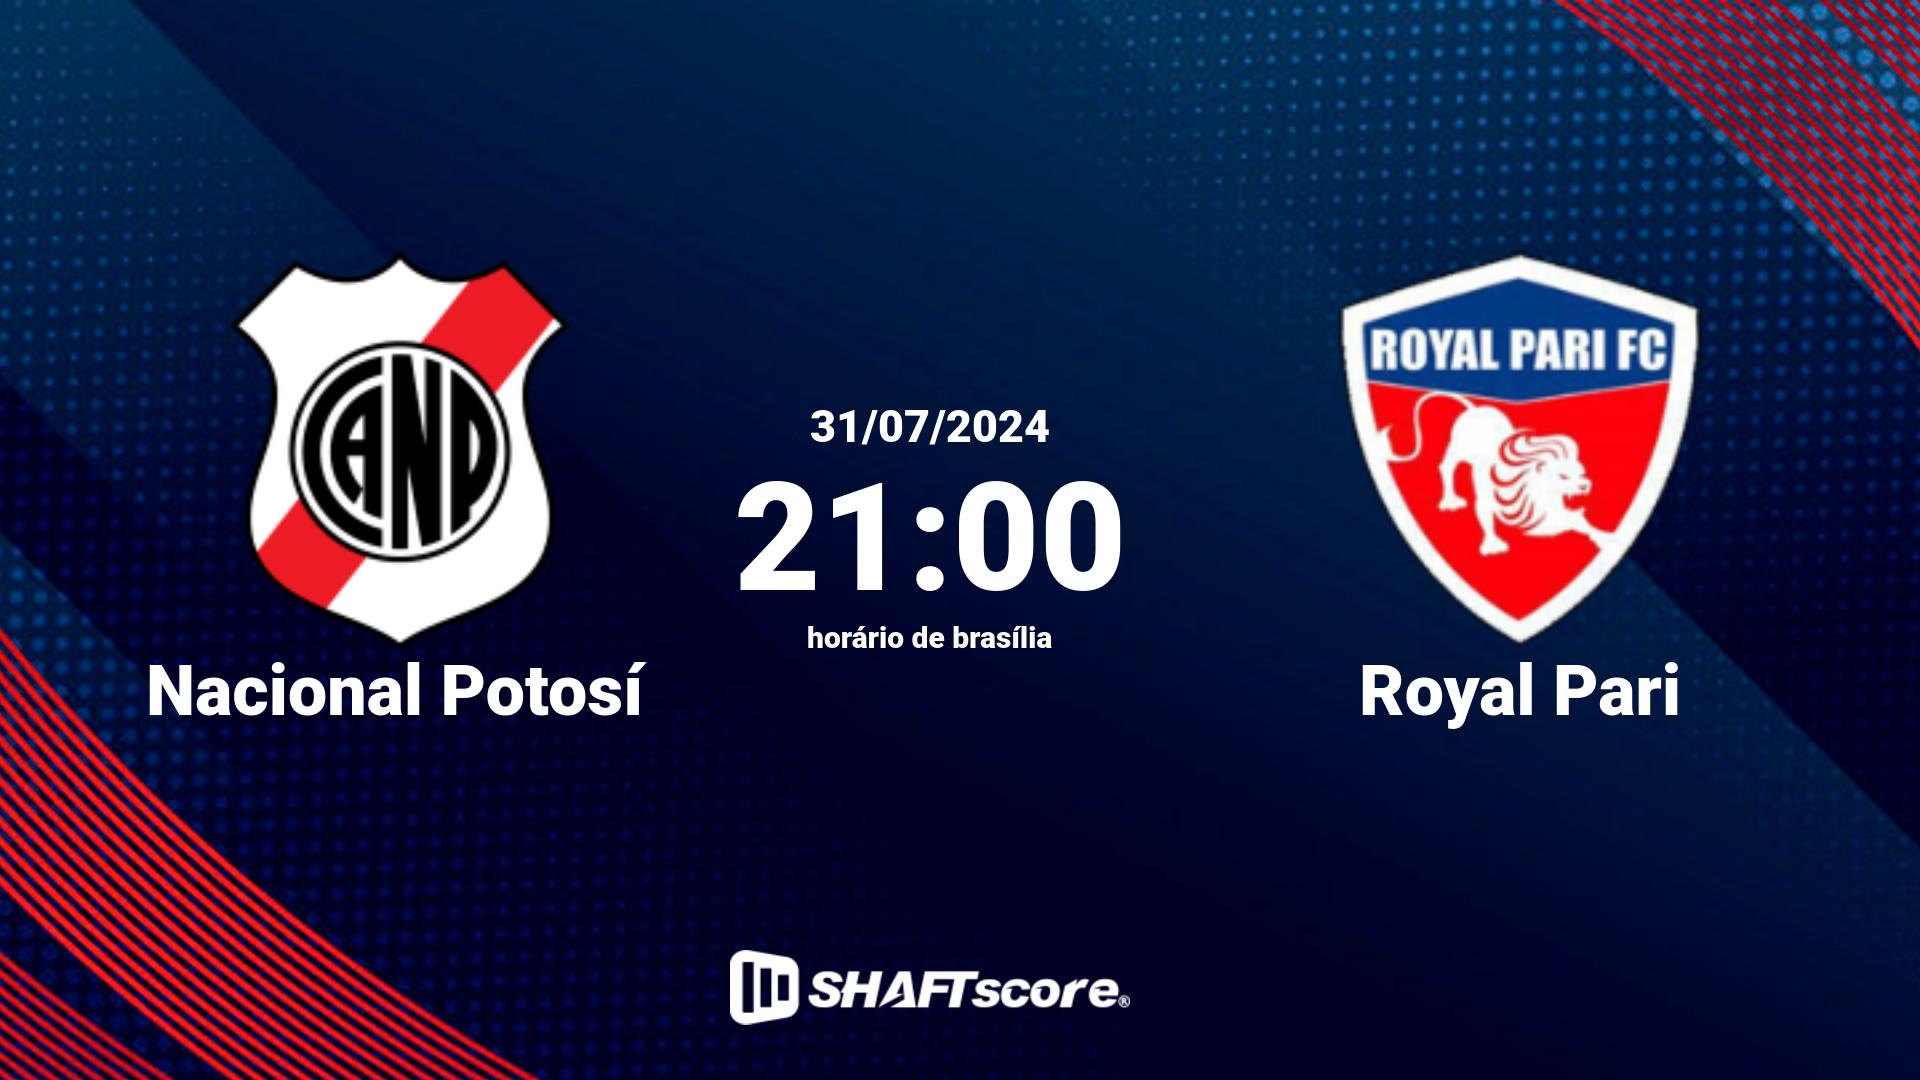 Estatísticas do jogo Nacional Potosí vs Royal Pari 31.07 21:00